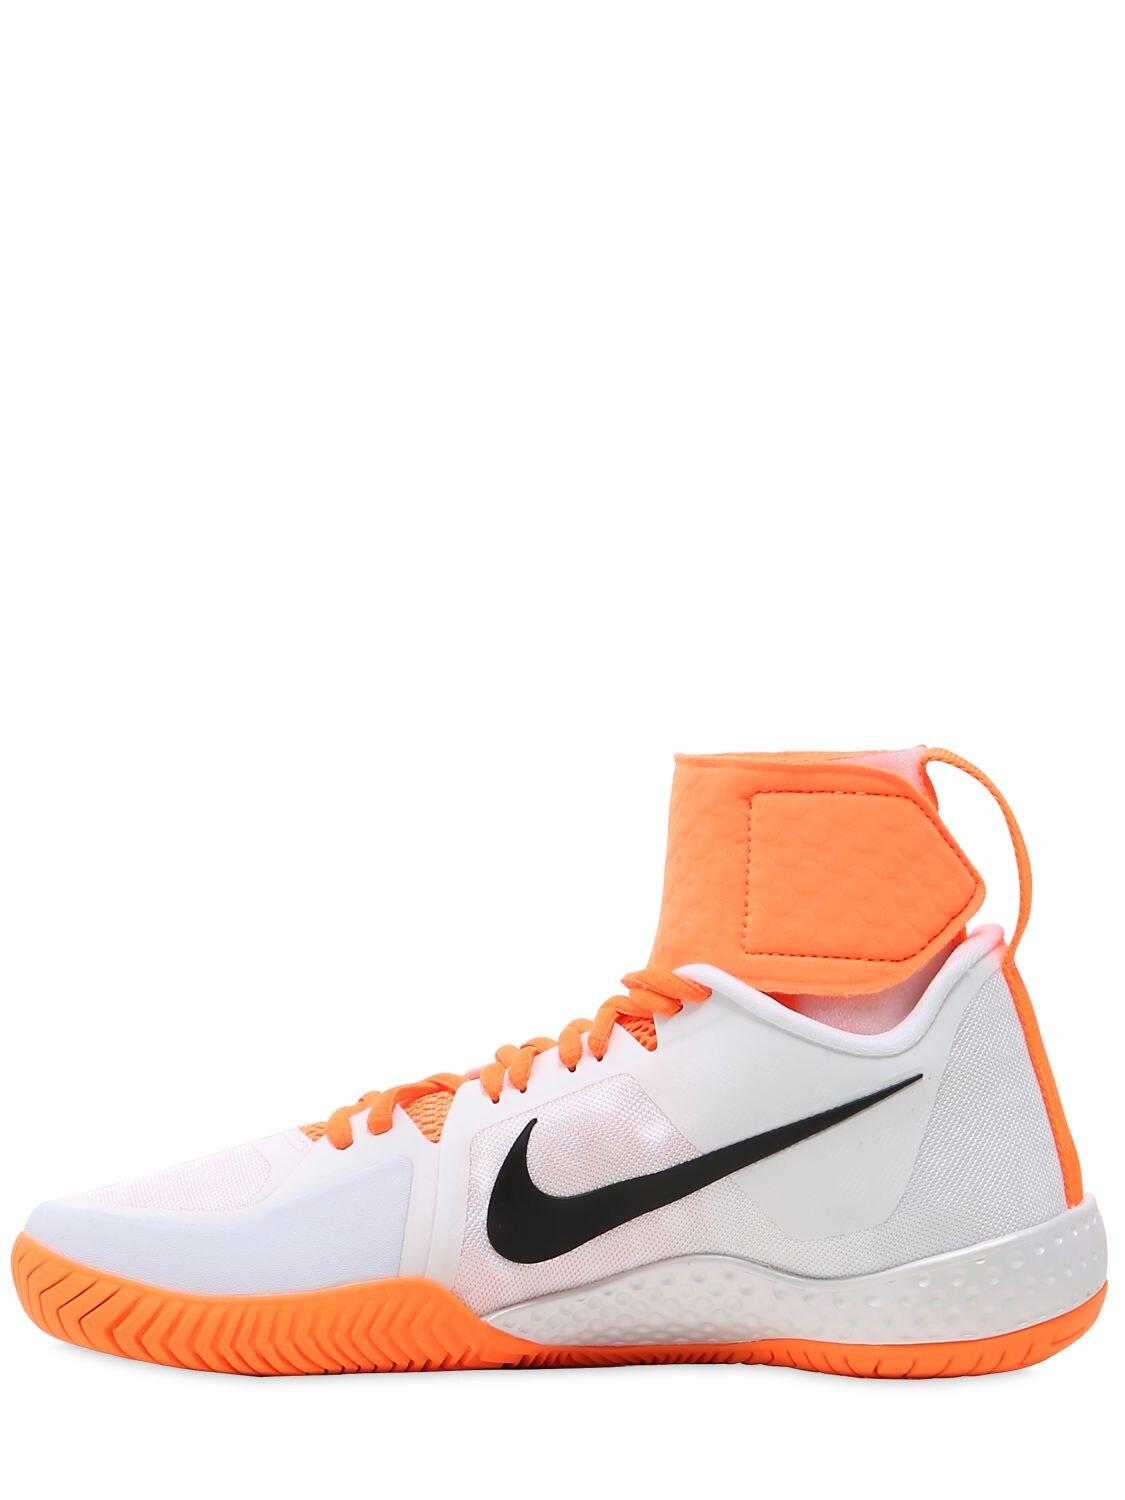 Nike Serena Williams Flare Tennis Sneakers in White/Orange (Orange) | Lyst